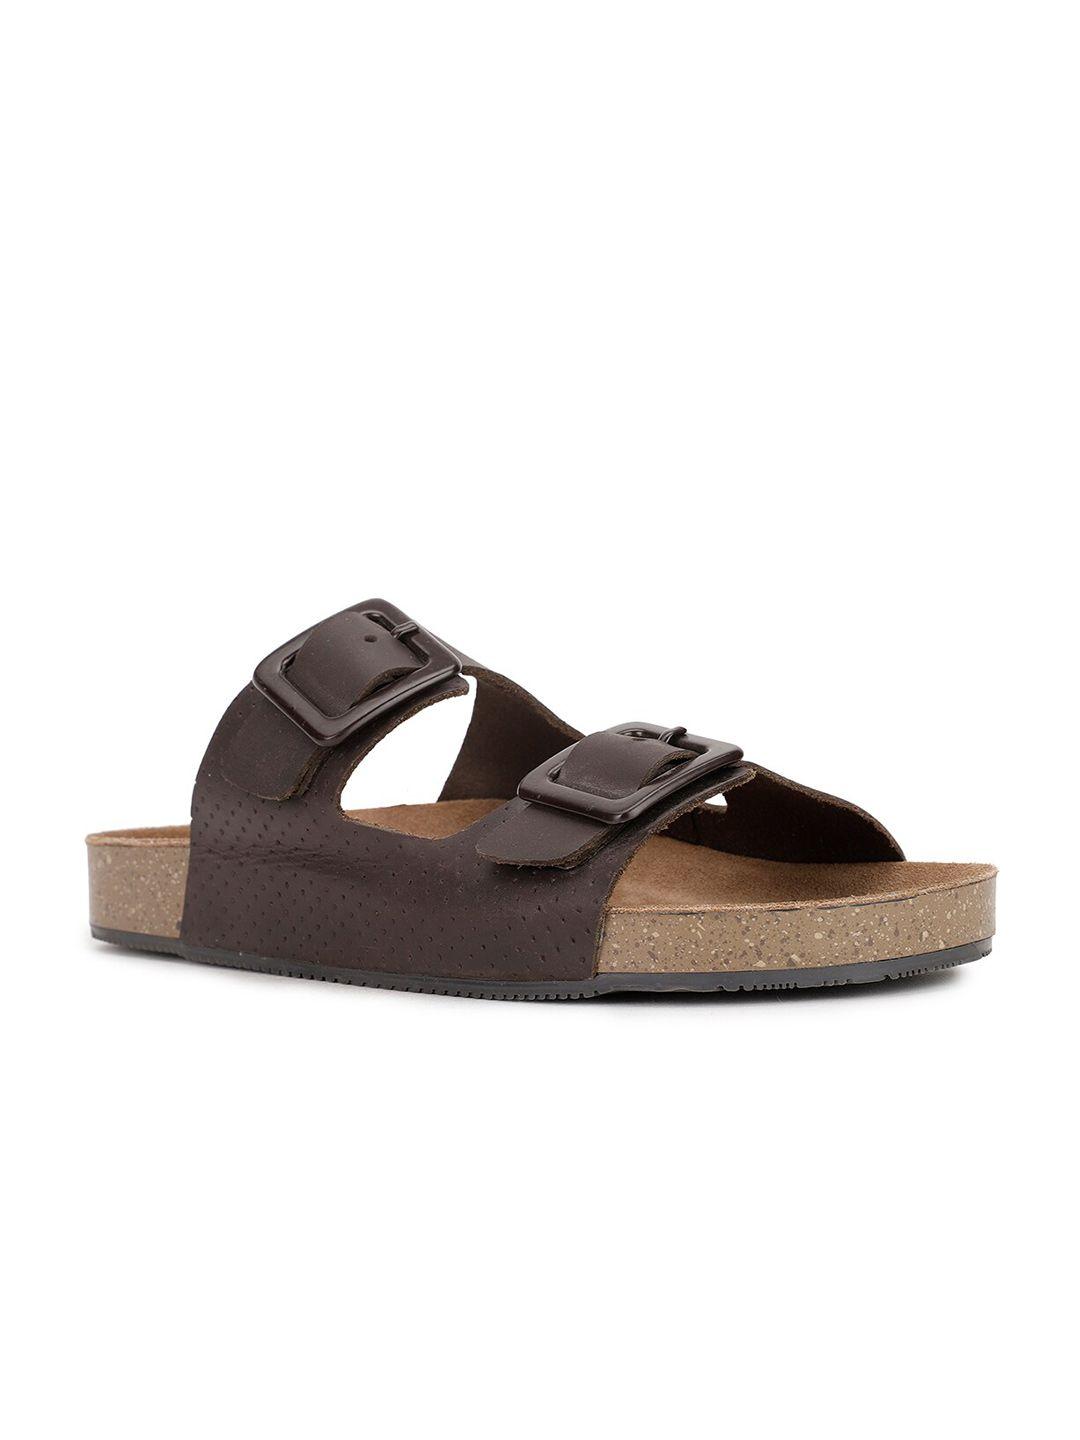 bata men brown leather comfort sandals